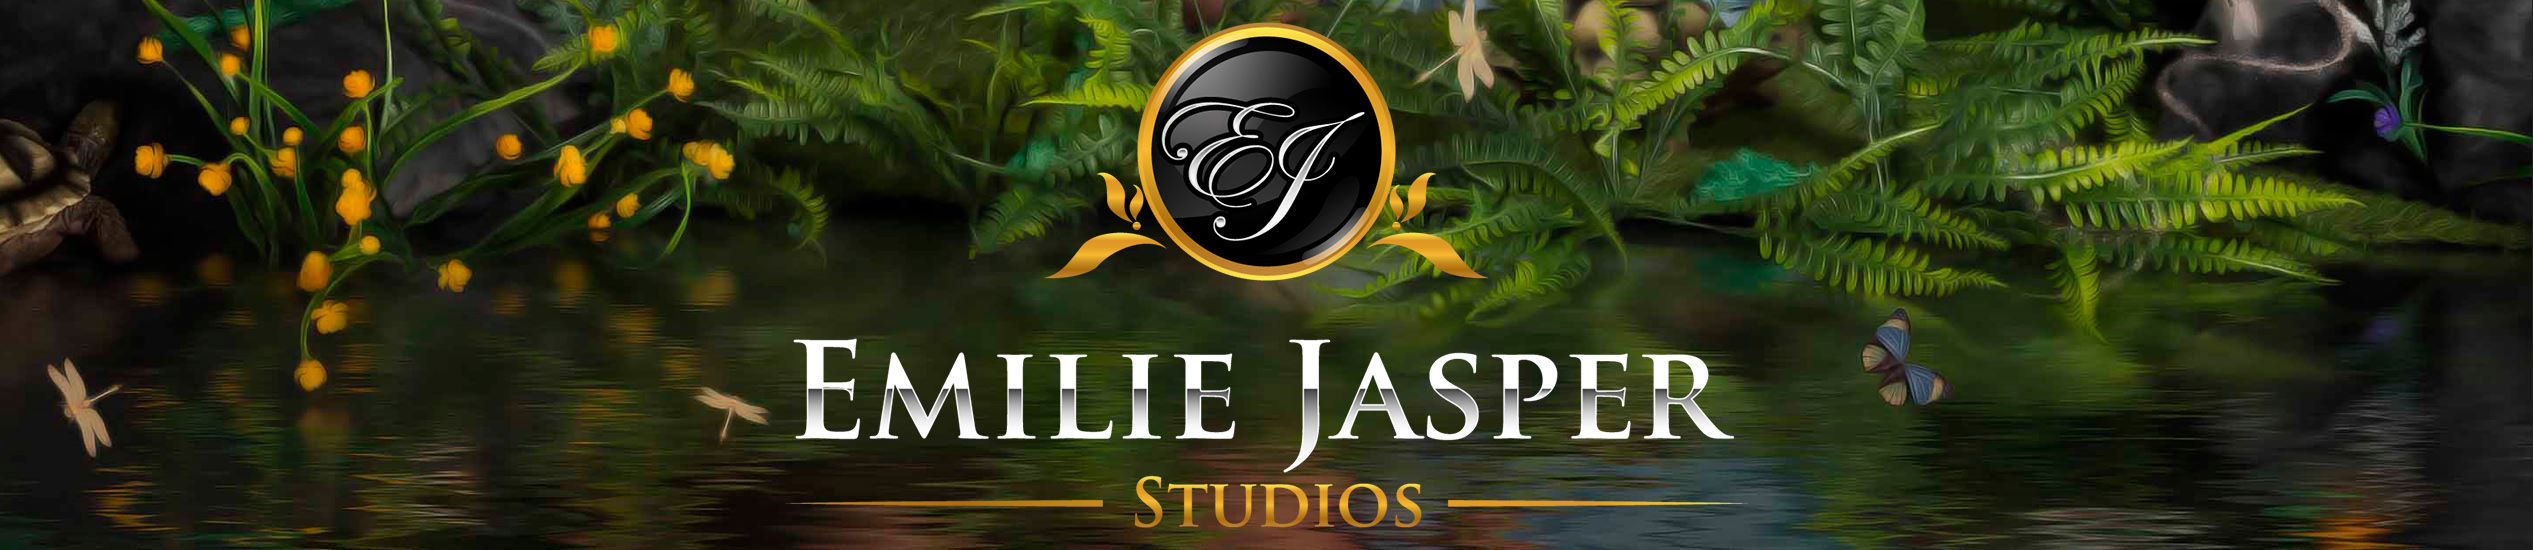 Emilie Jasper Studios